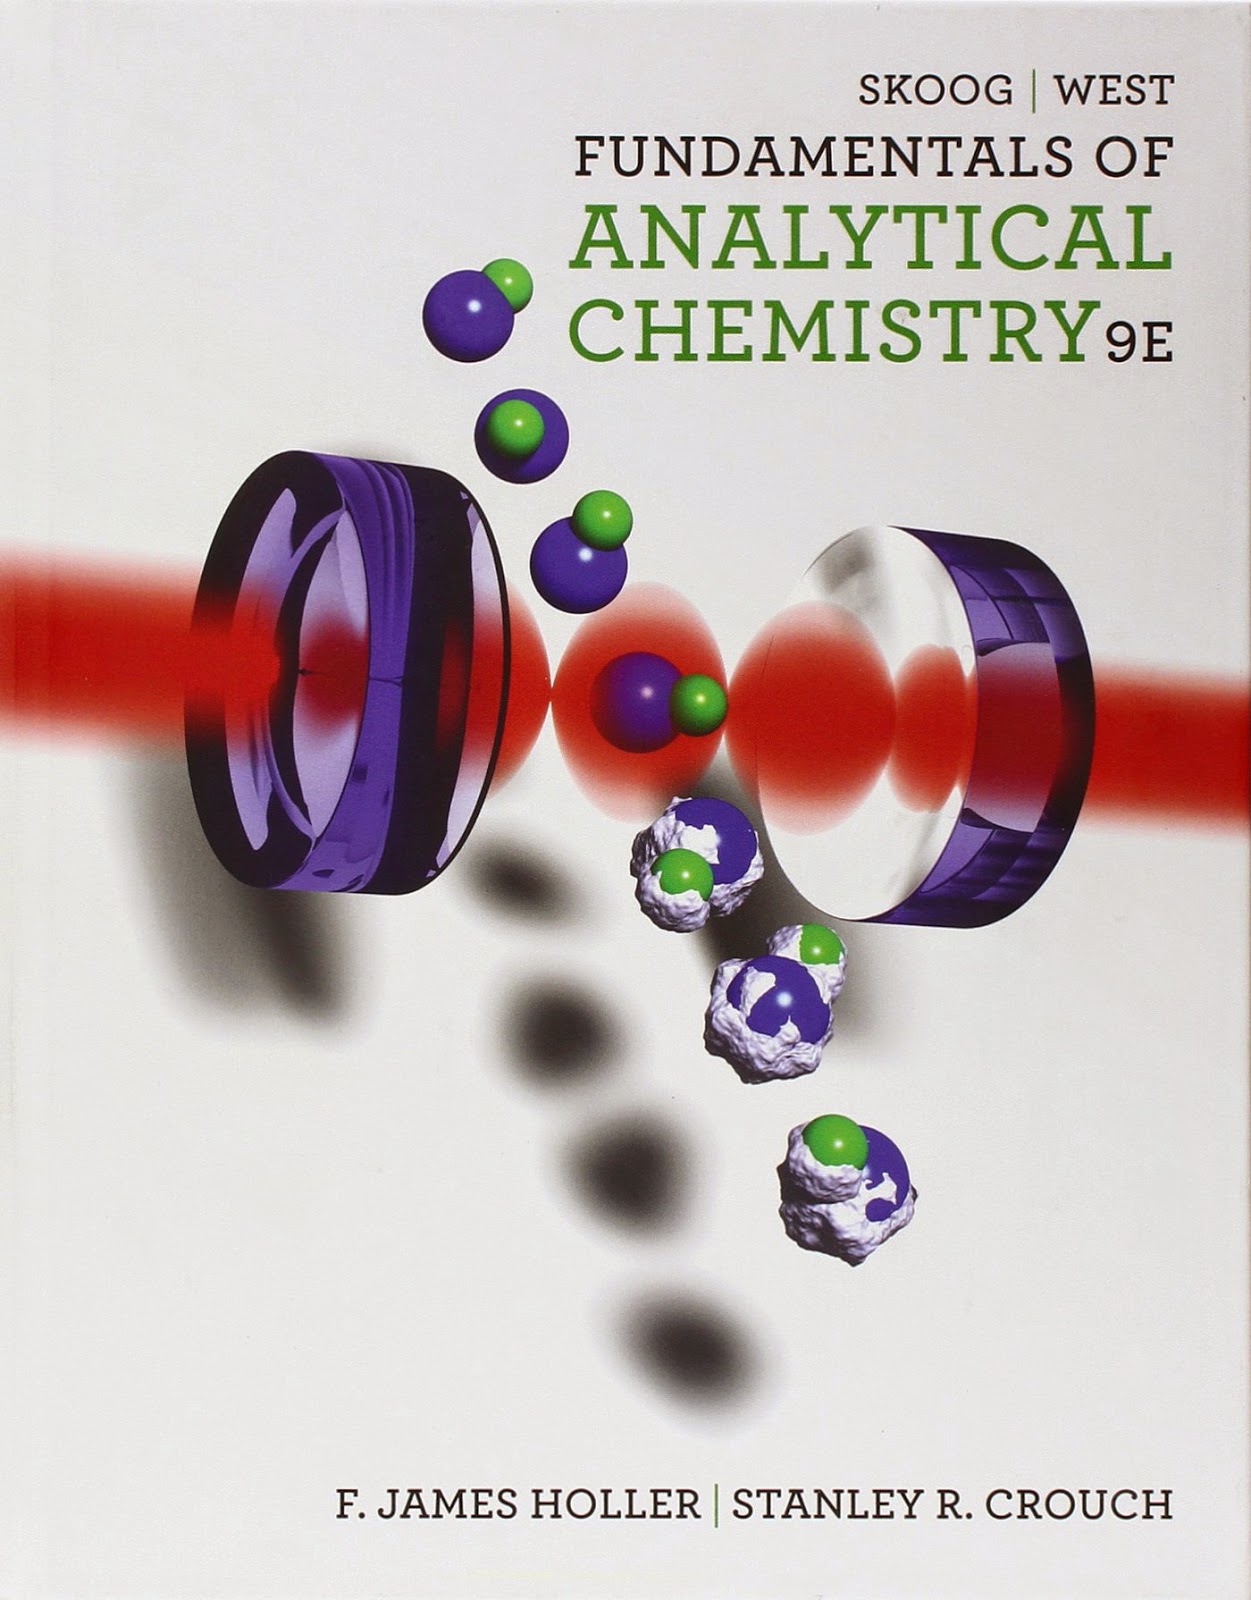 http://kingcheapebook.blogspot.com/2014/08/fundamentals-of-analytical-chemistry.html